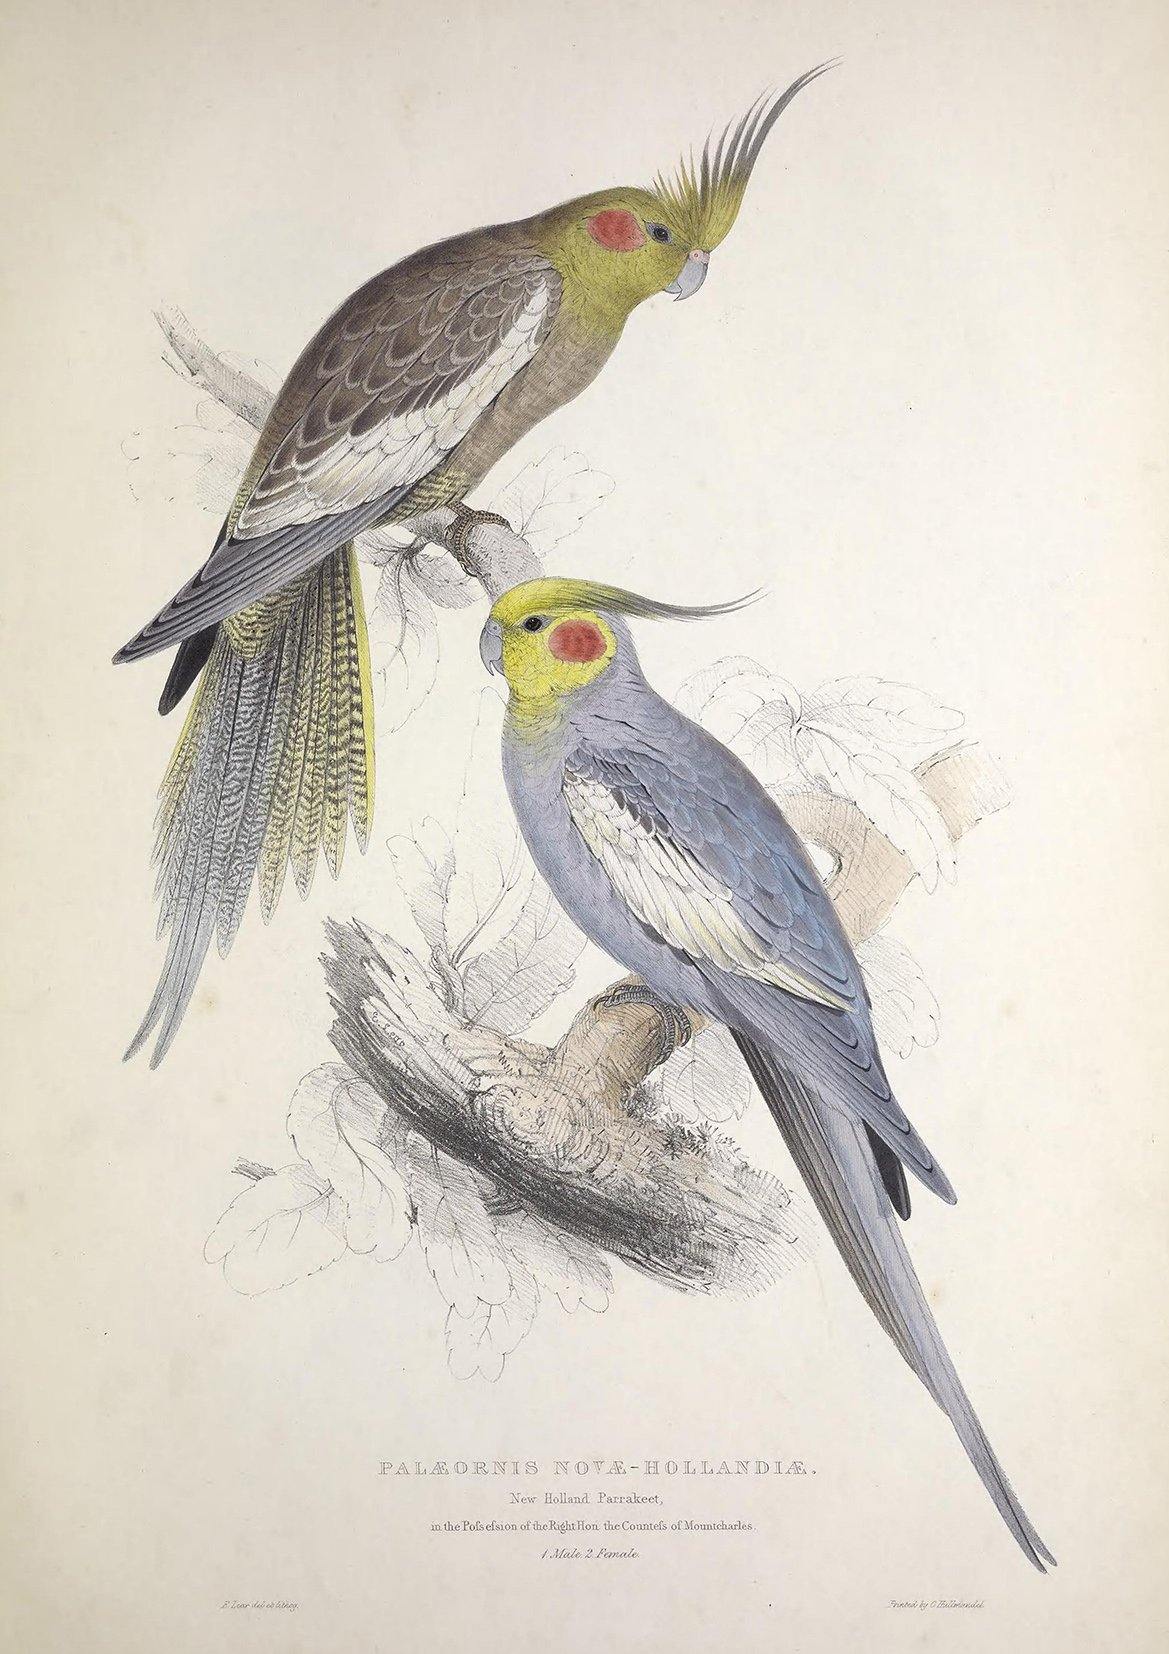 PARROT AND PARAKEET PRINTS: Vintage Bird Art Illustrations - Pimlico Prints